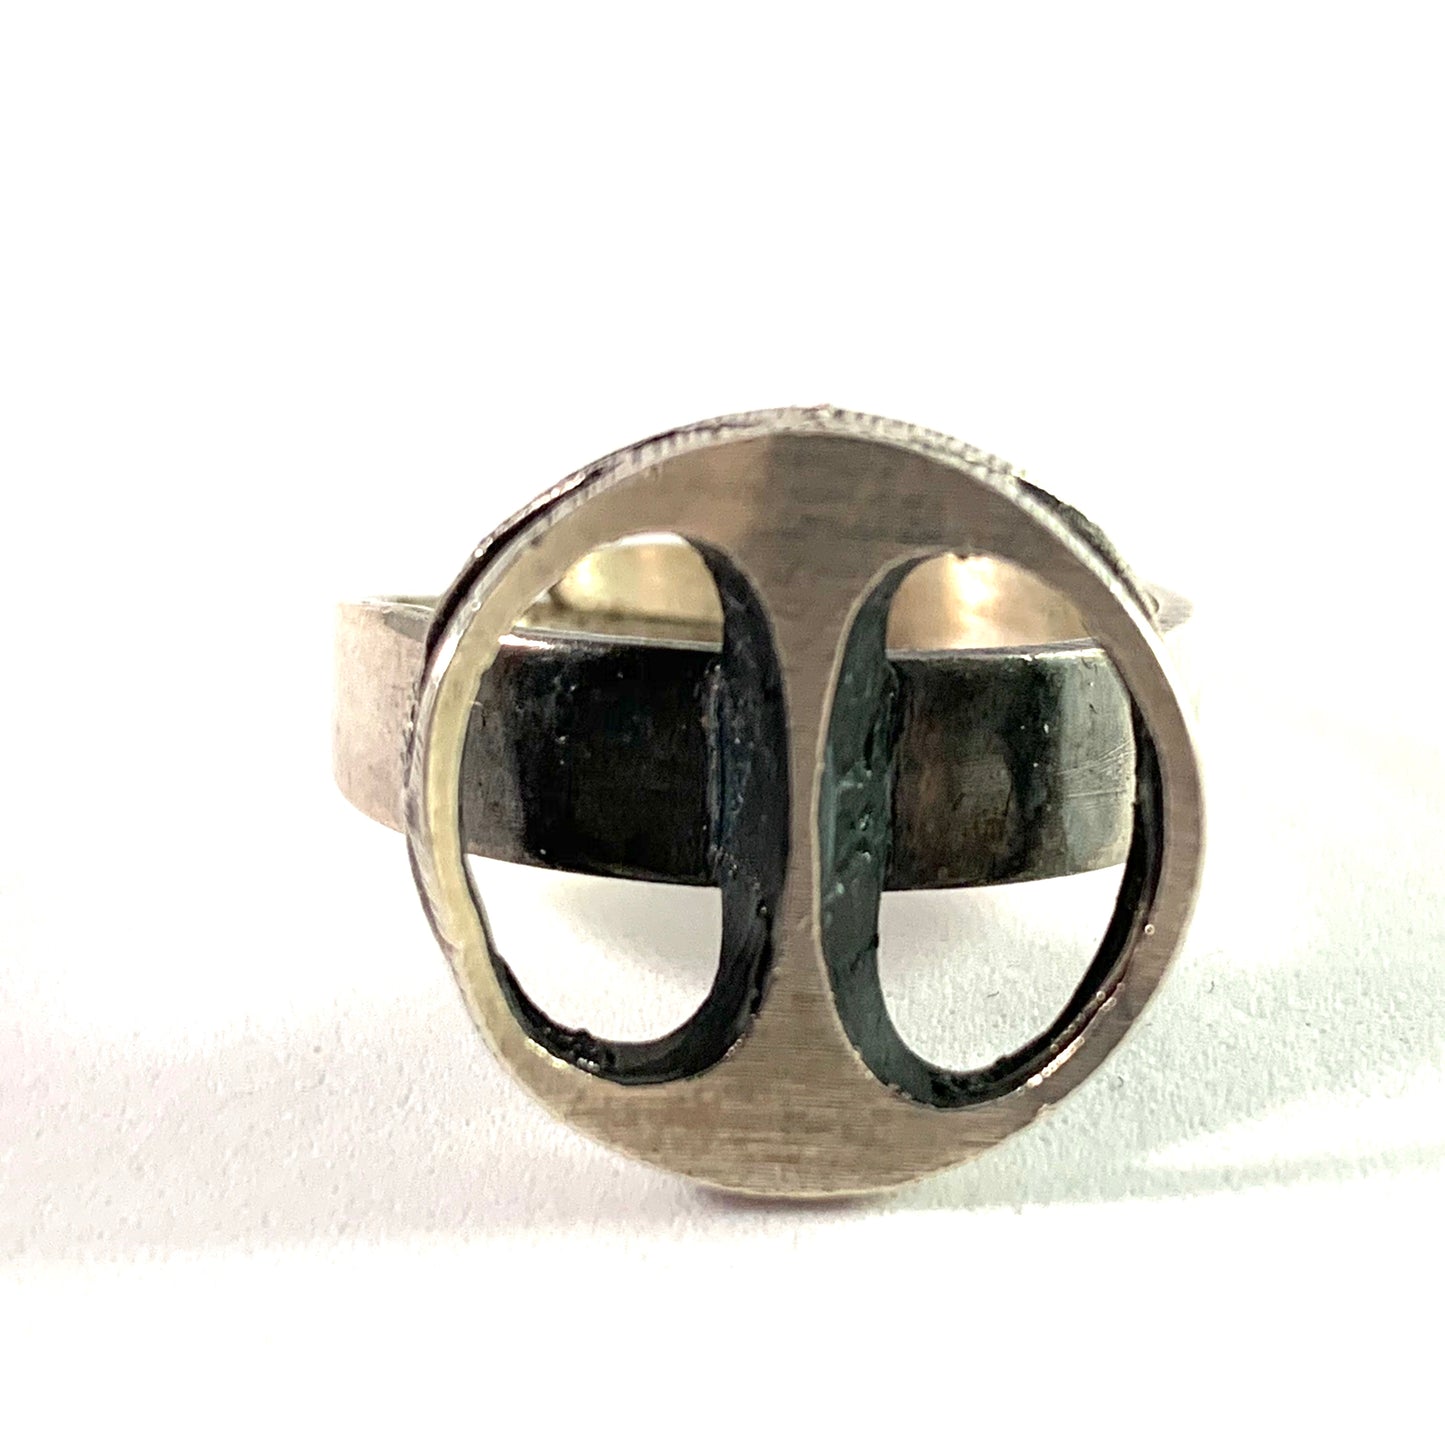 Karl Laine, Finland 1973 Sterling Silver Modernist Ring.